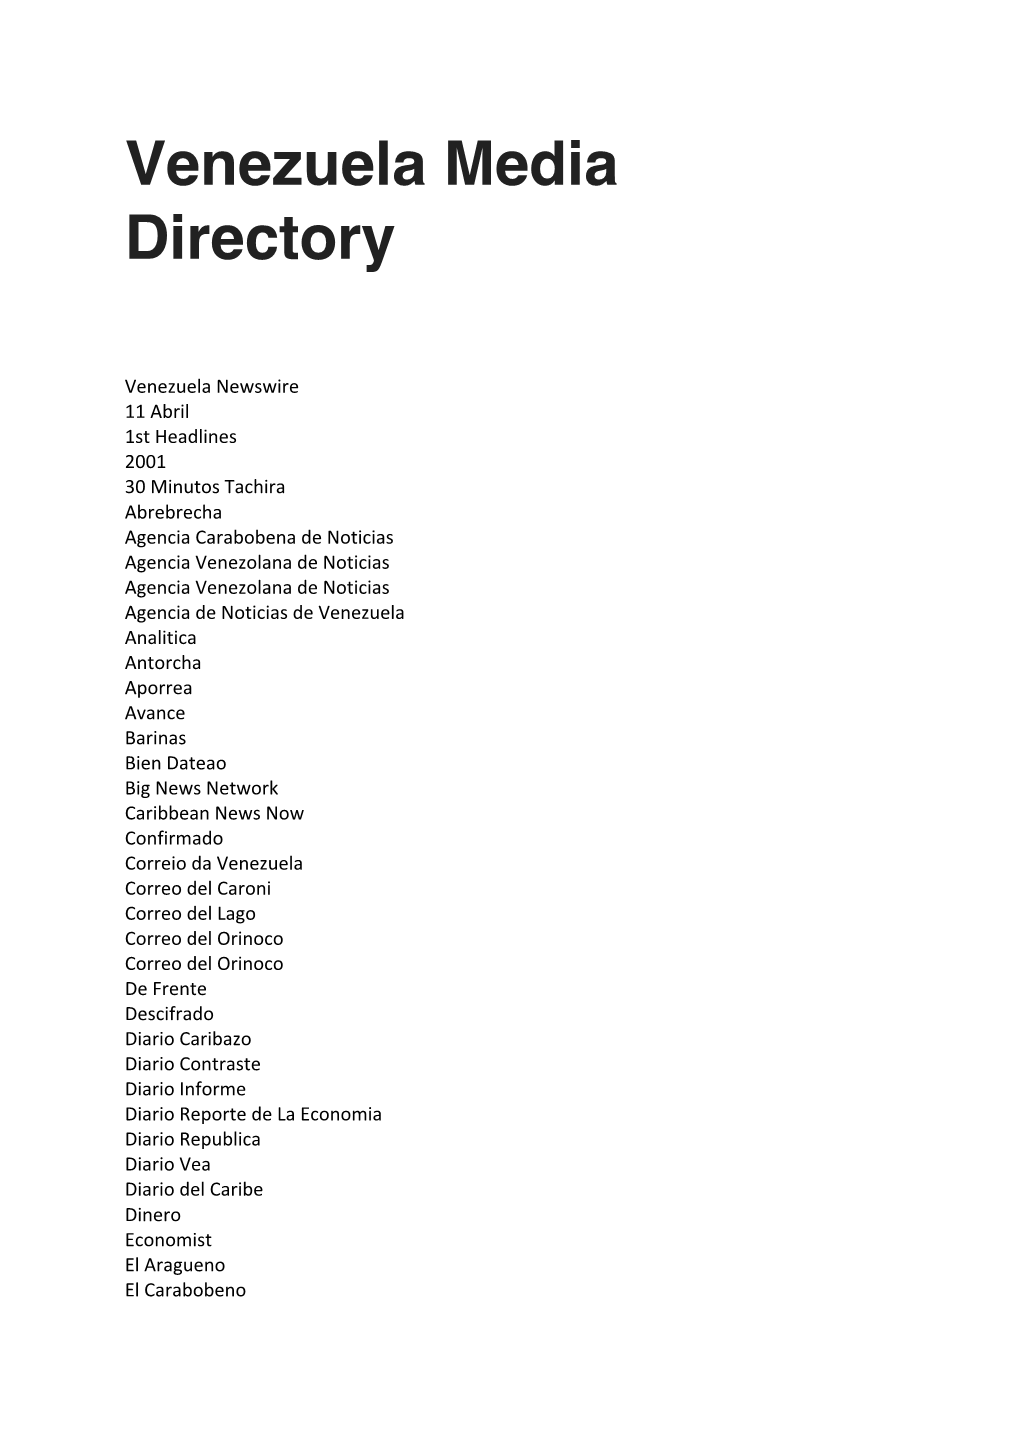 Venezuela Media Directory